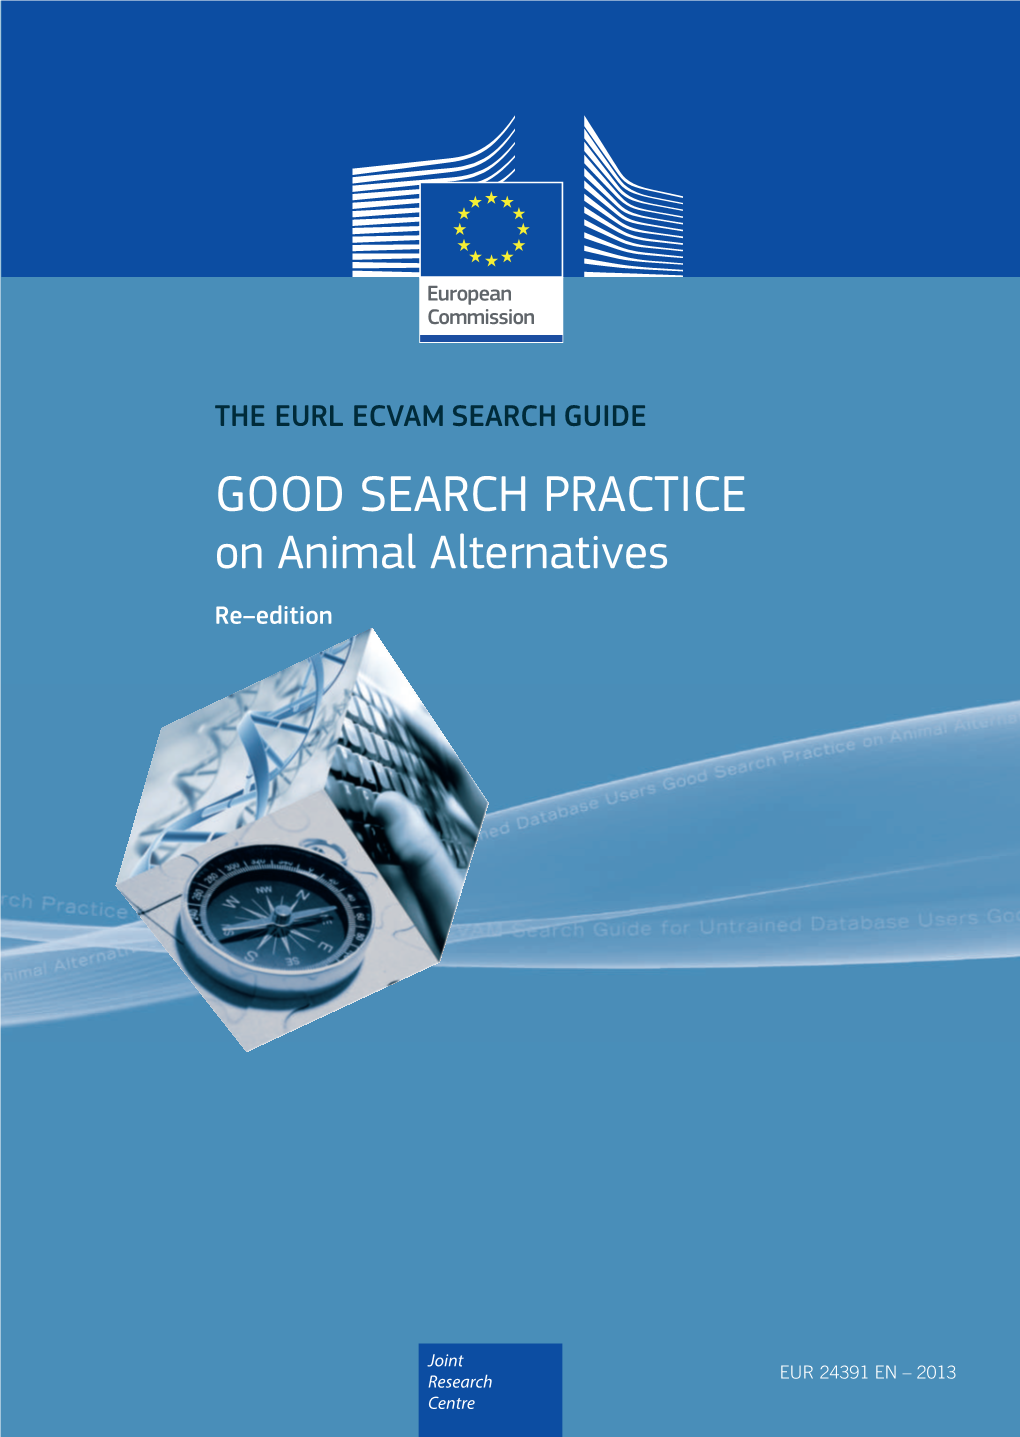 Good Search Practice on Animal Alternatives, the EURL ECVAM